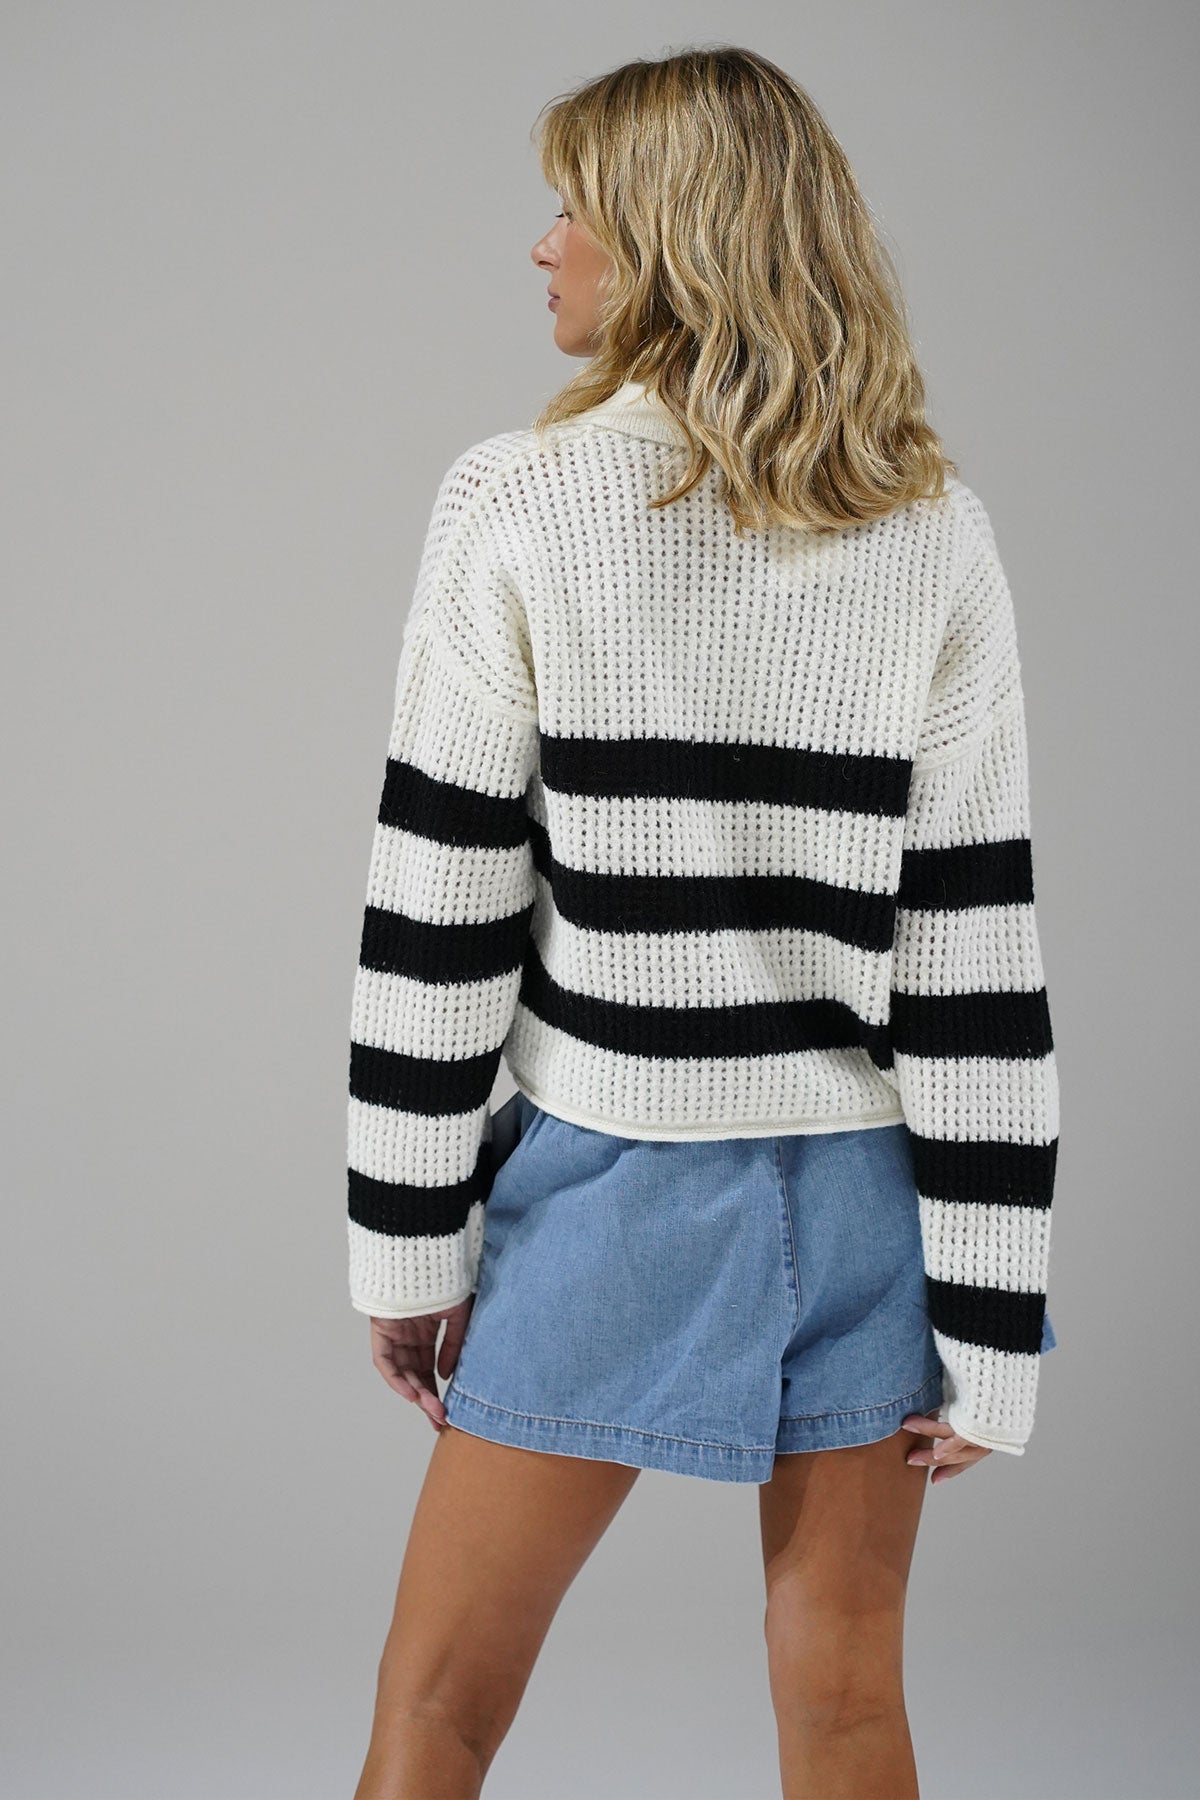 LNA Ari Stripe Sweater in Ivory and Black Stripe